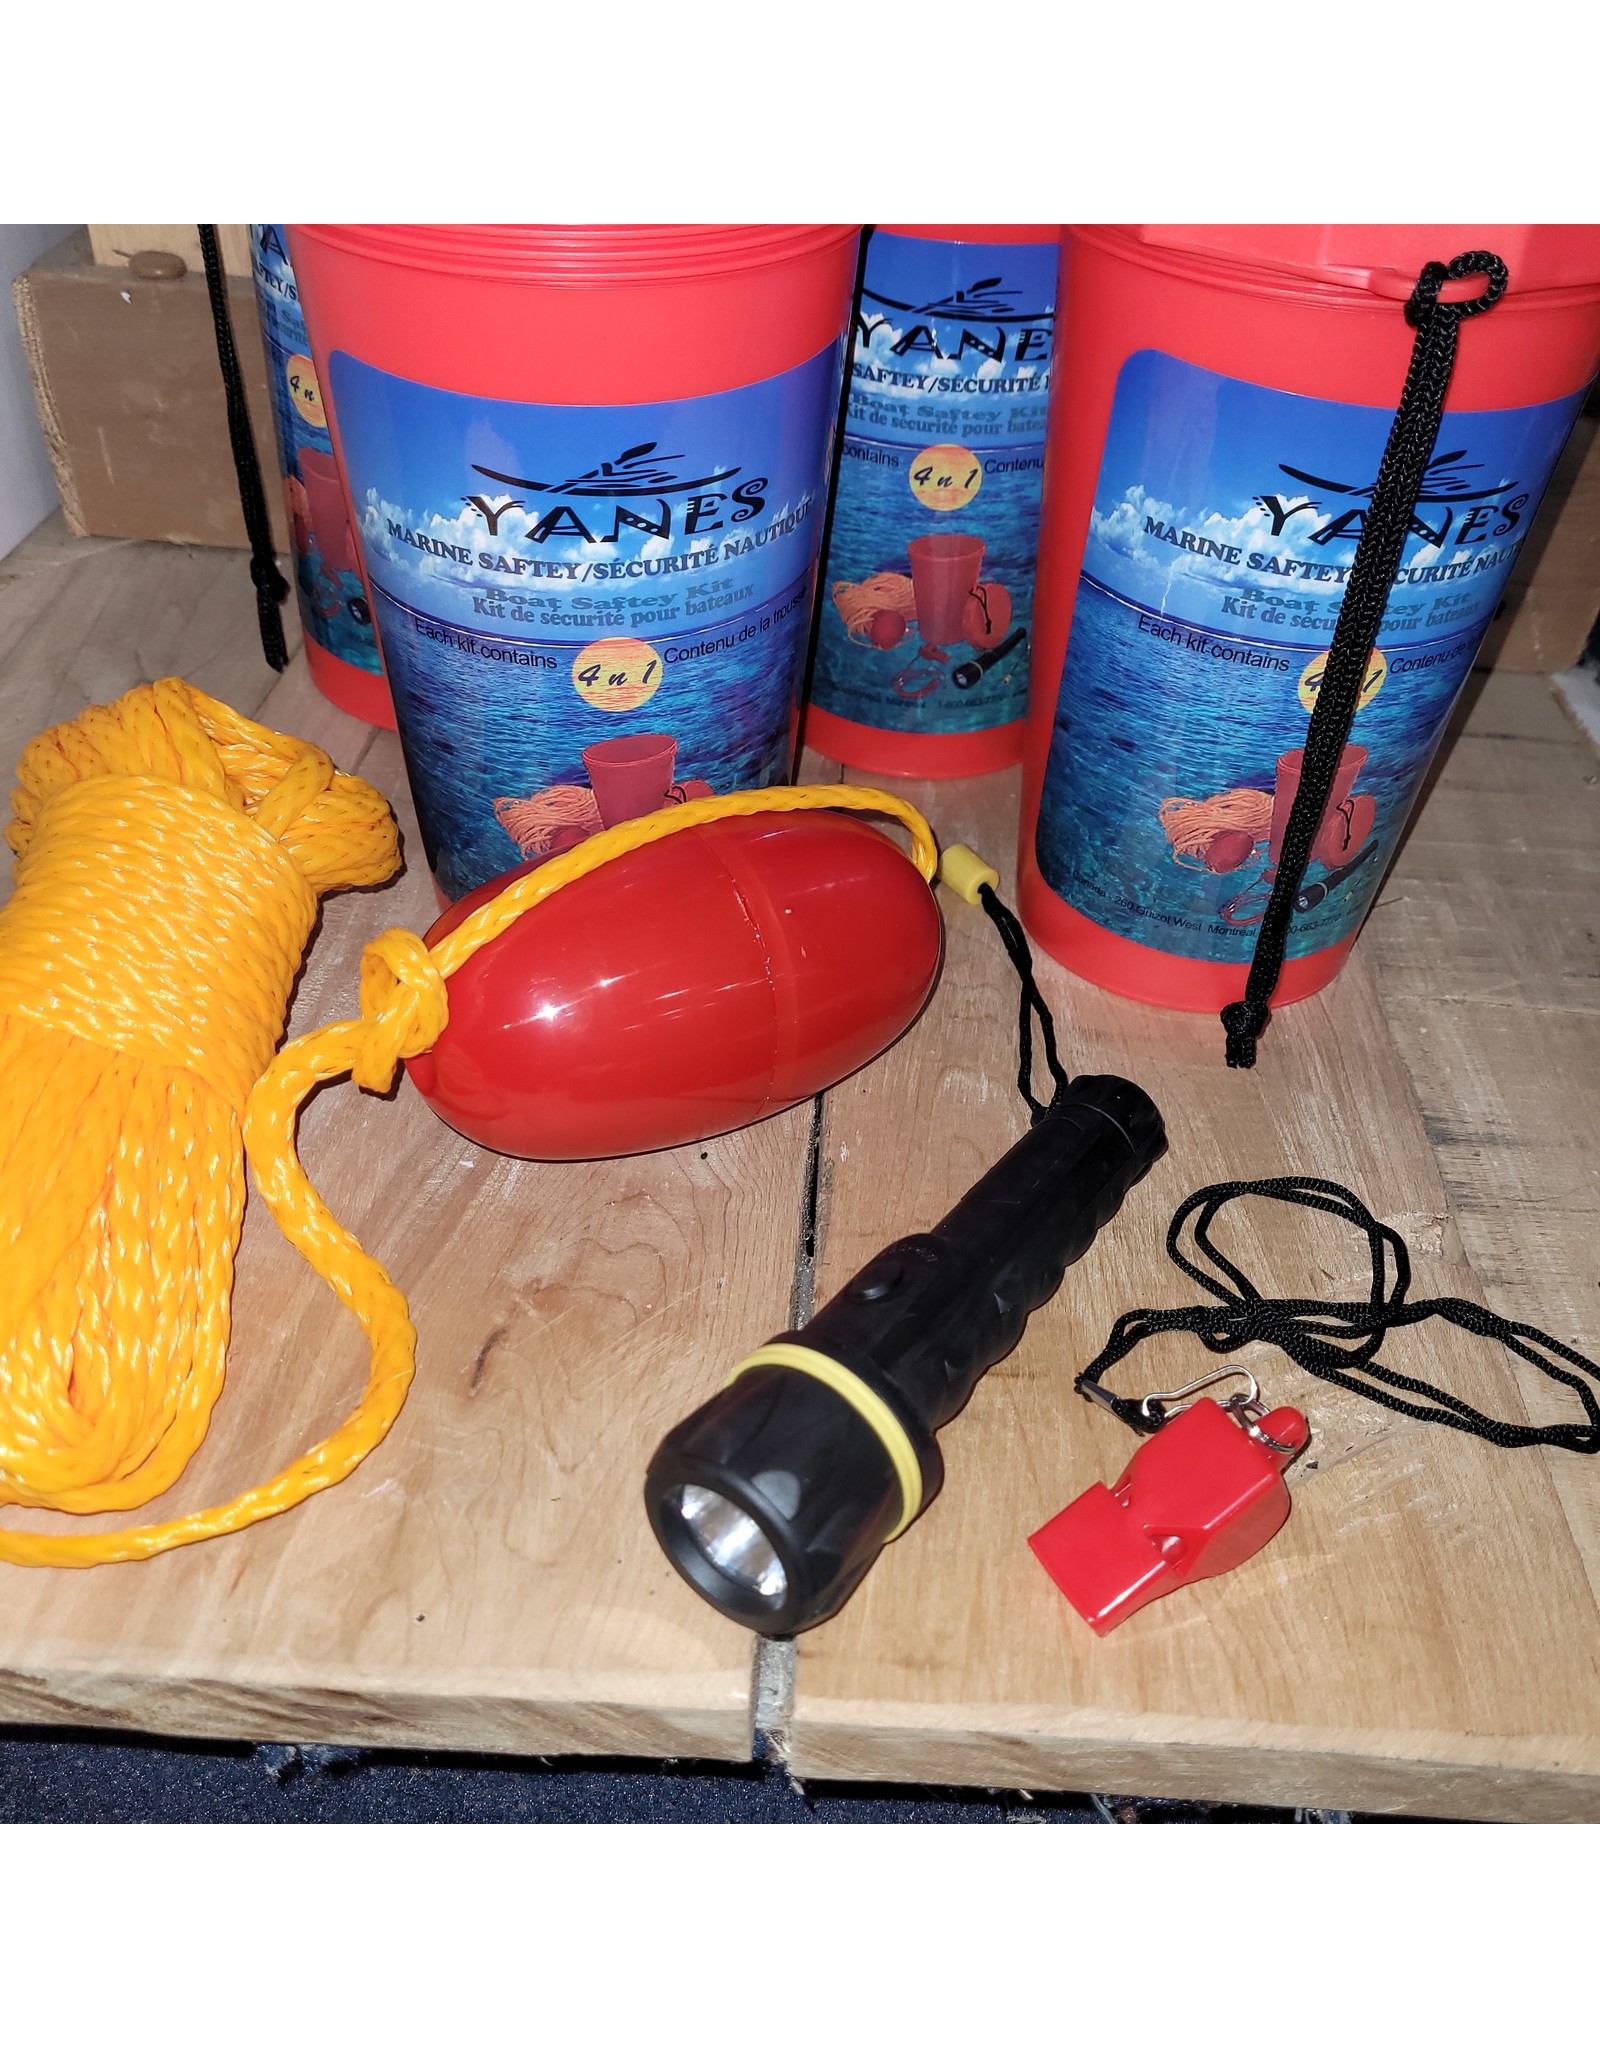 Yanes Yanes water sports safety kit